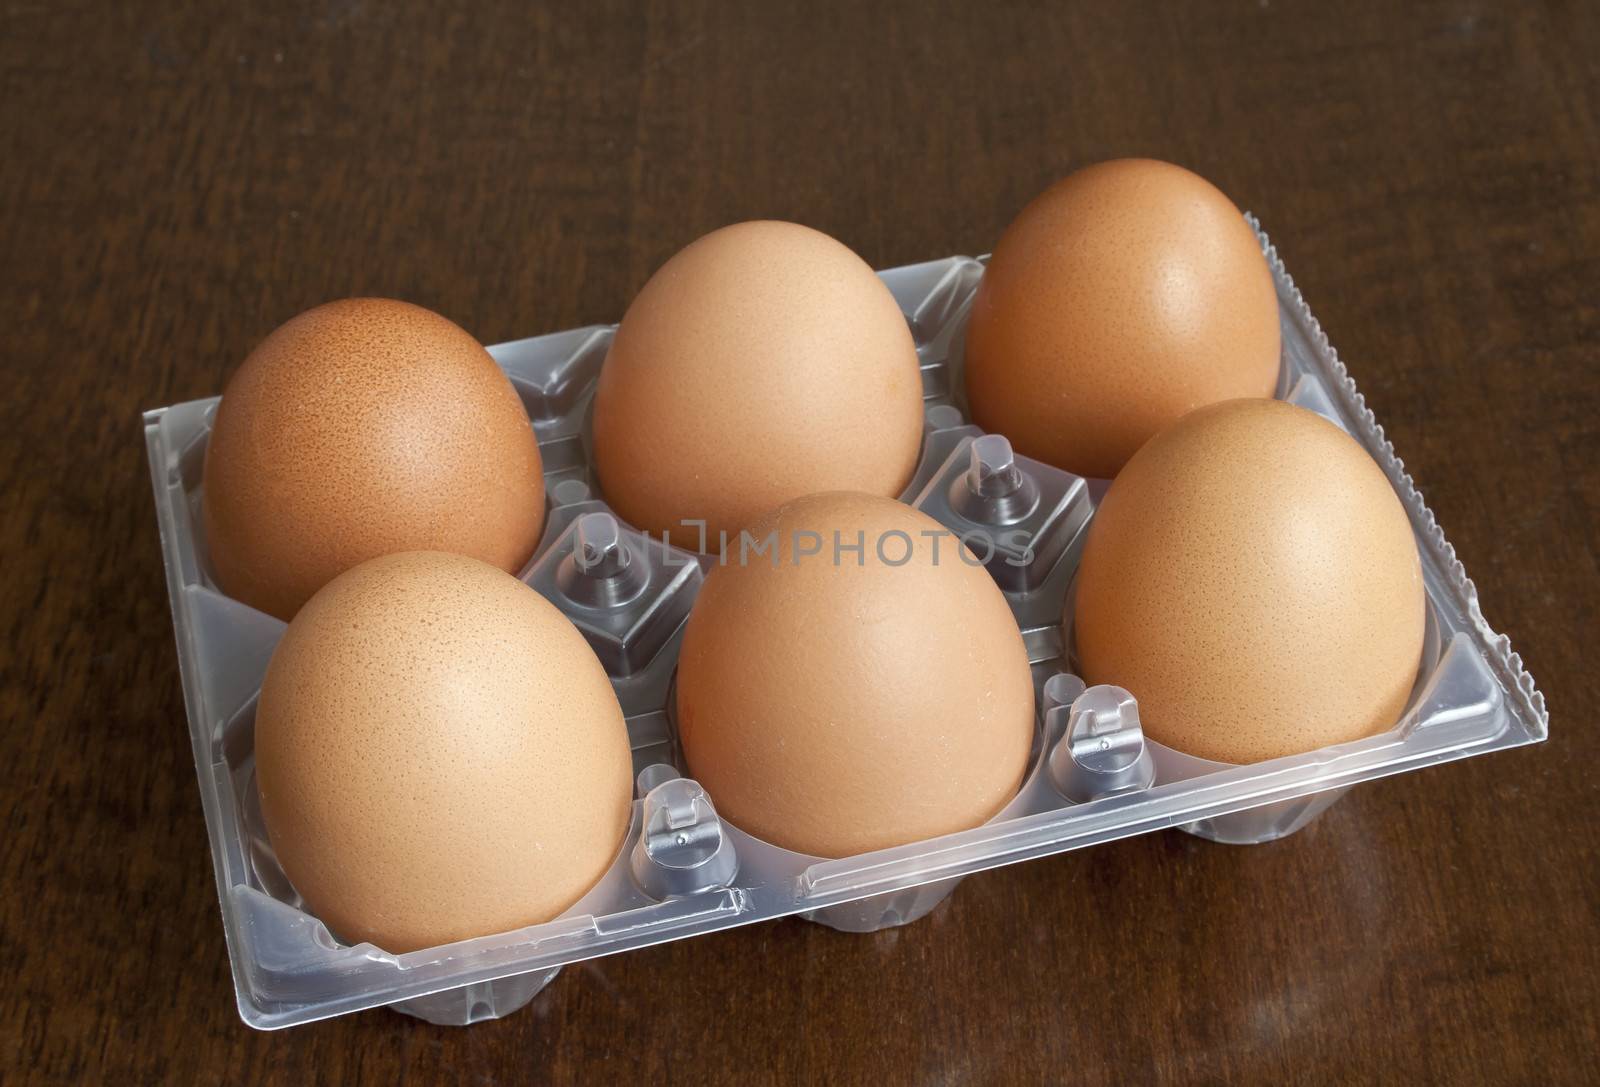 Six heg eggs by KGM